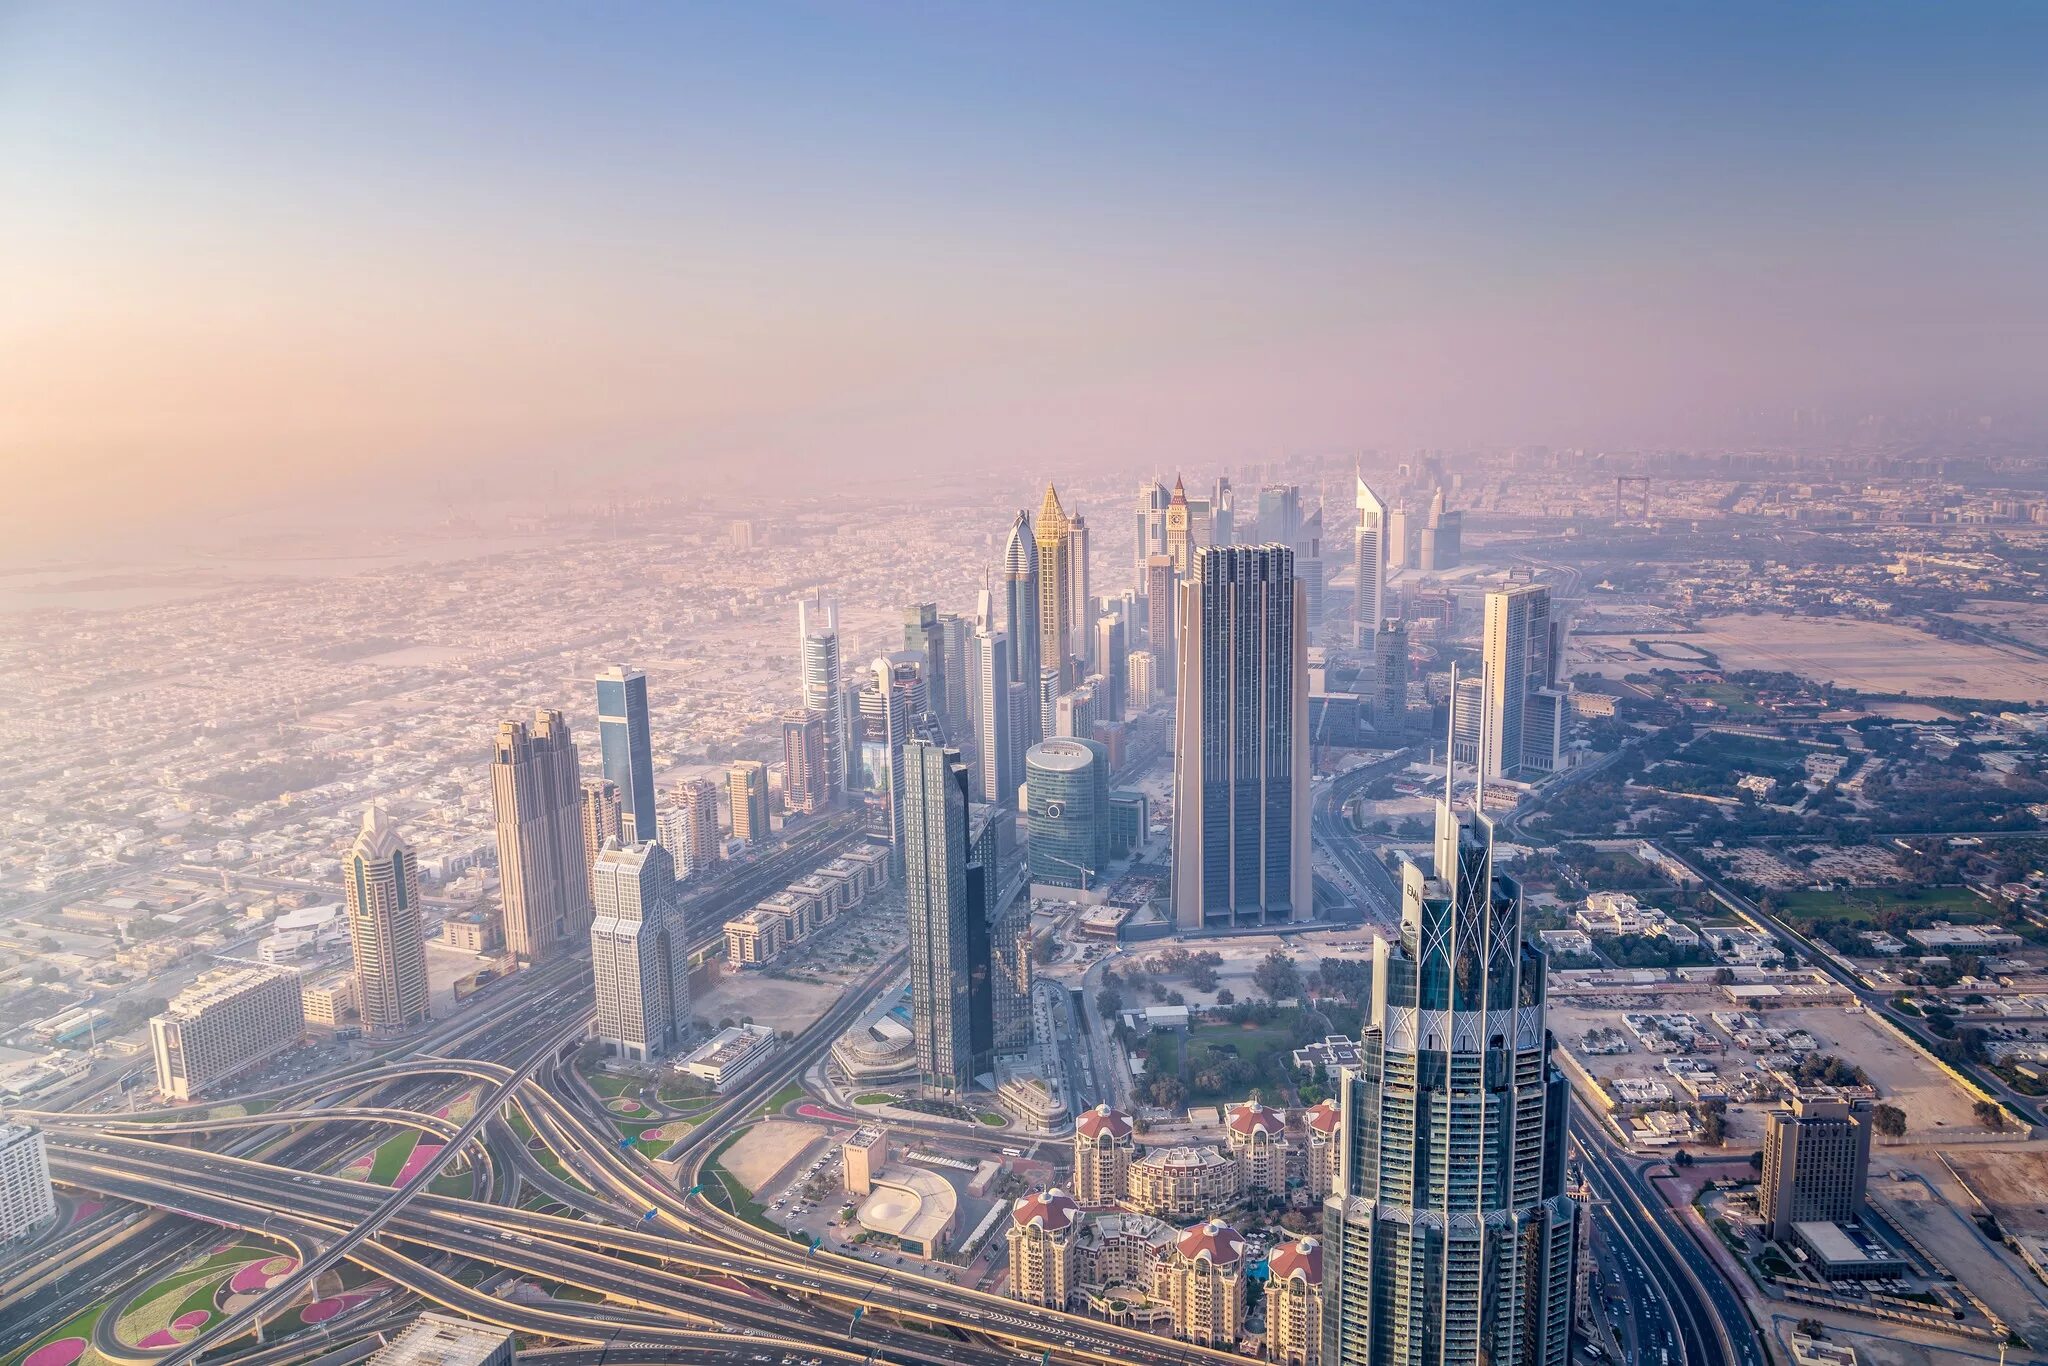 Uae cities. Бурдж Халифа. Небоскребы Дубая. Небоскребы Дубай ОАЭ. Башня Бурдж Халифа в Дубае.